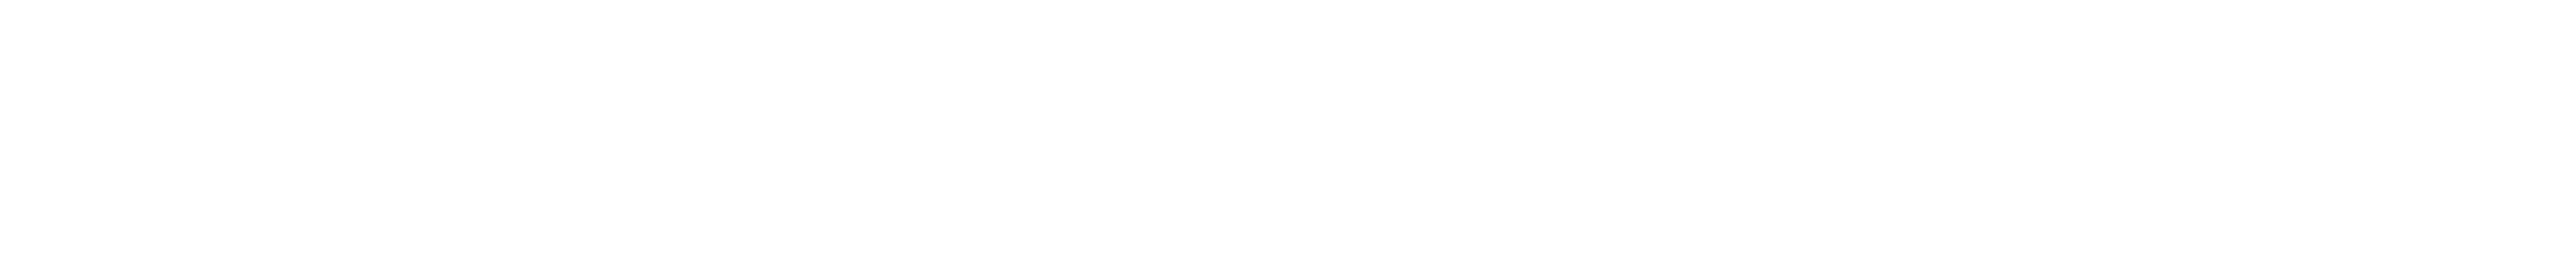 Washington Post Logo - The Washington Post | News Service & Syndicate